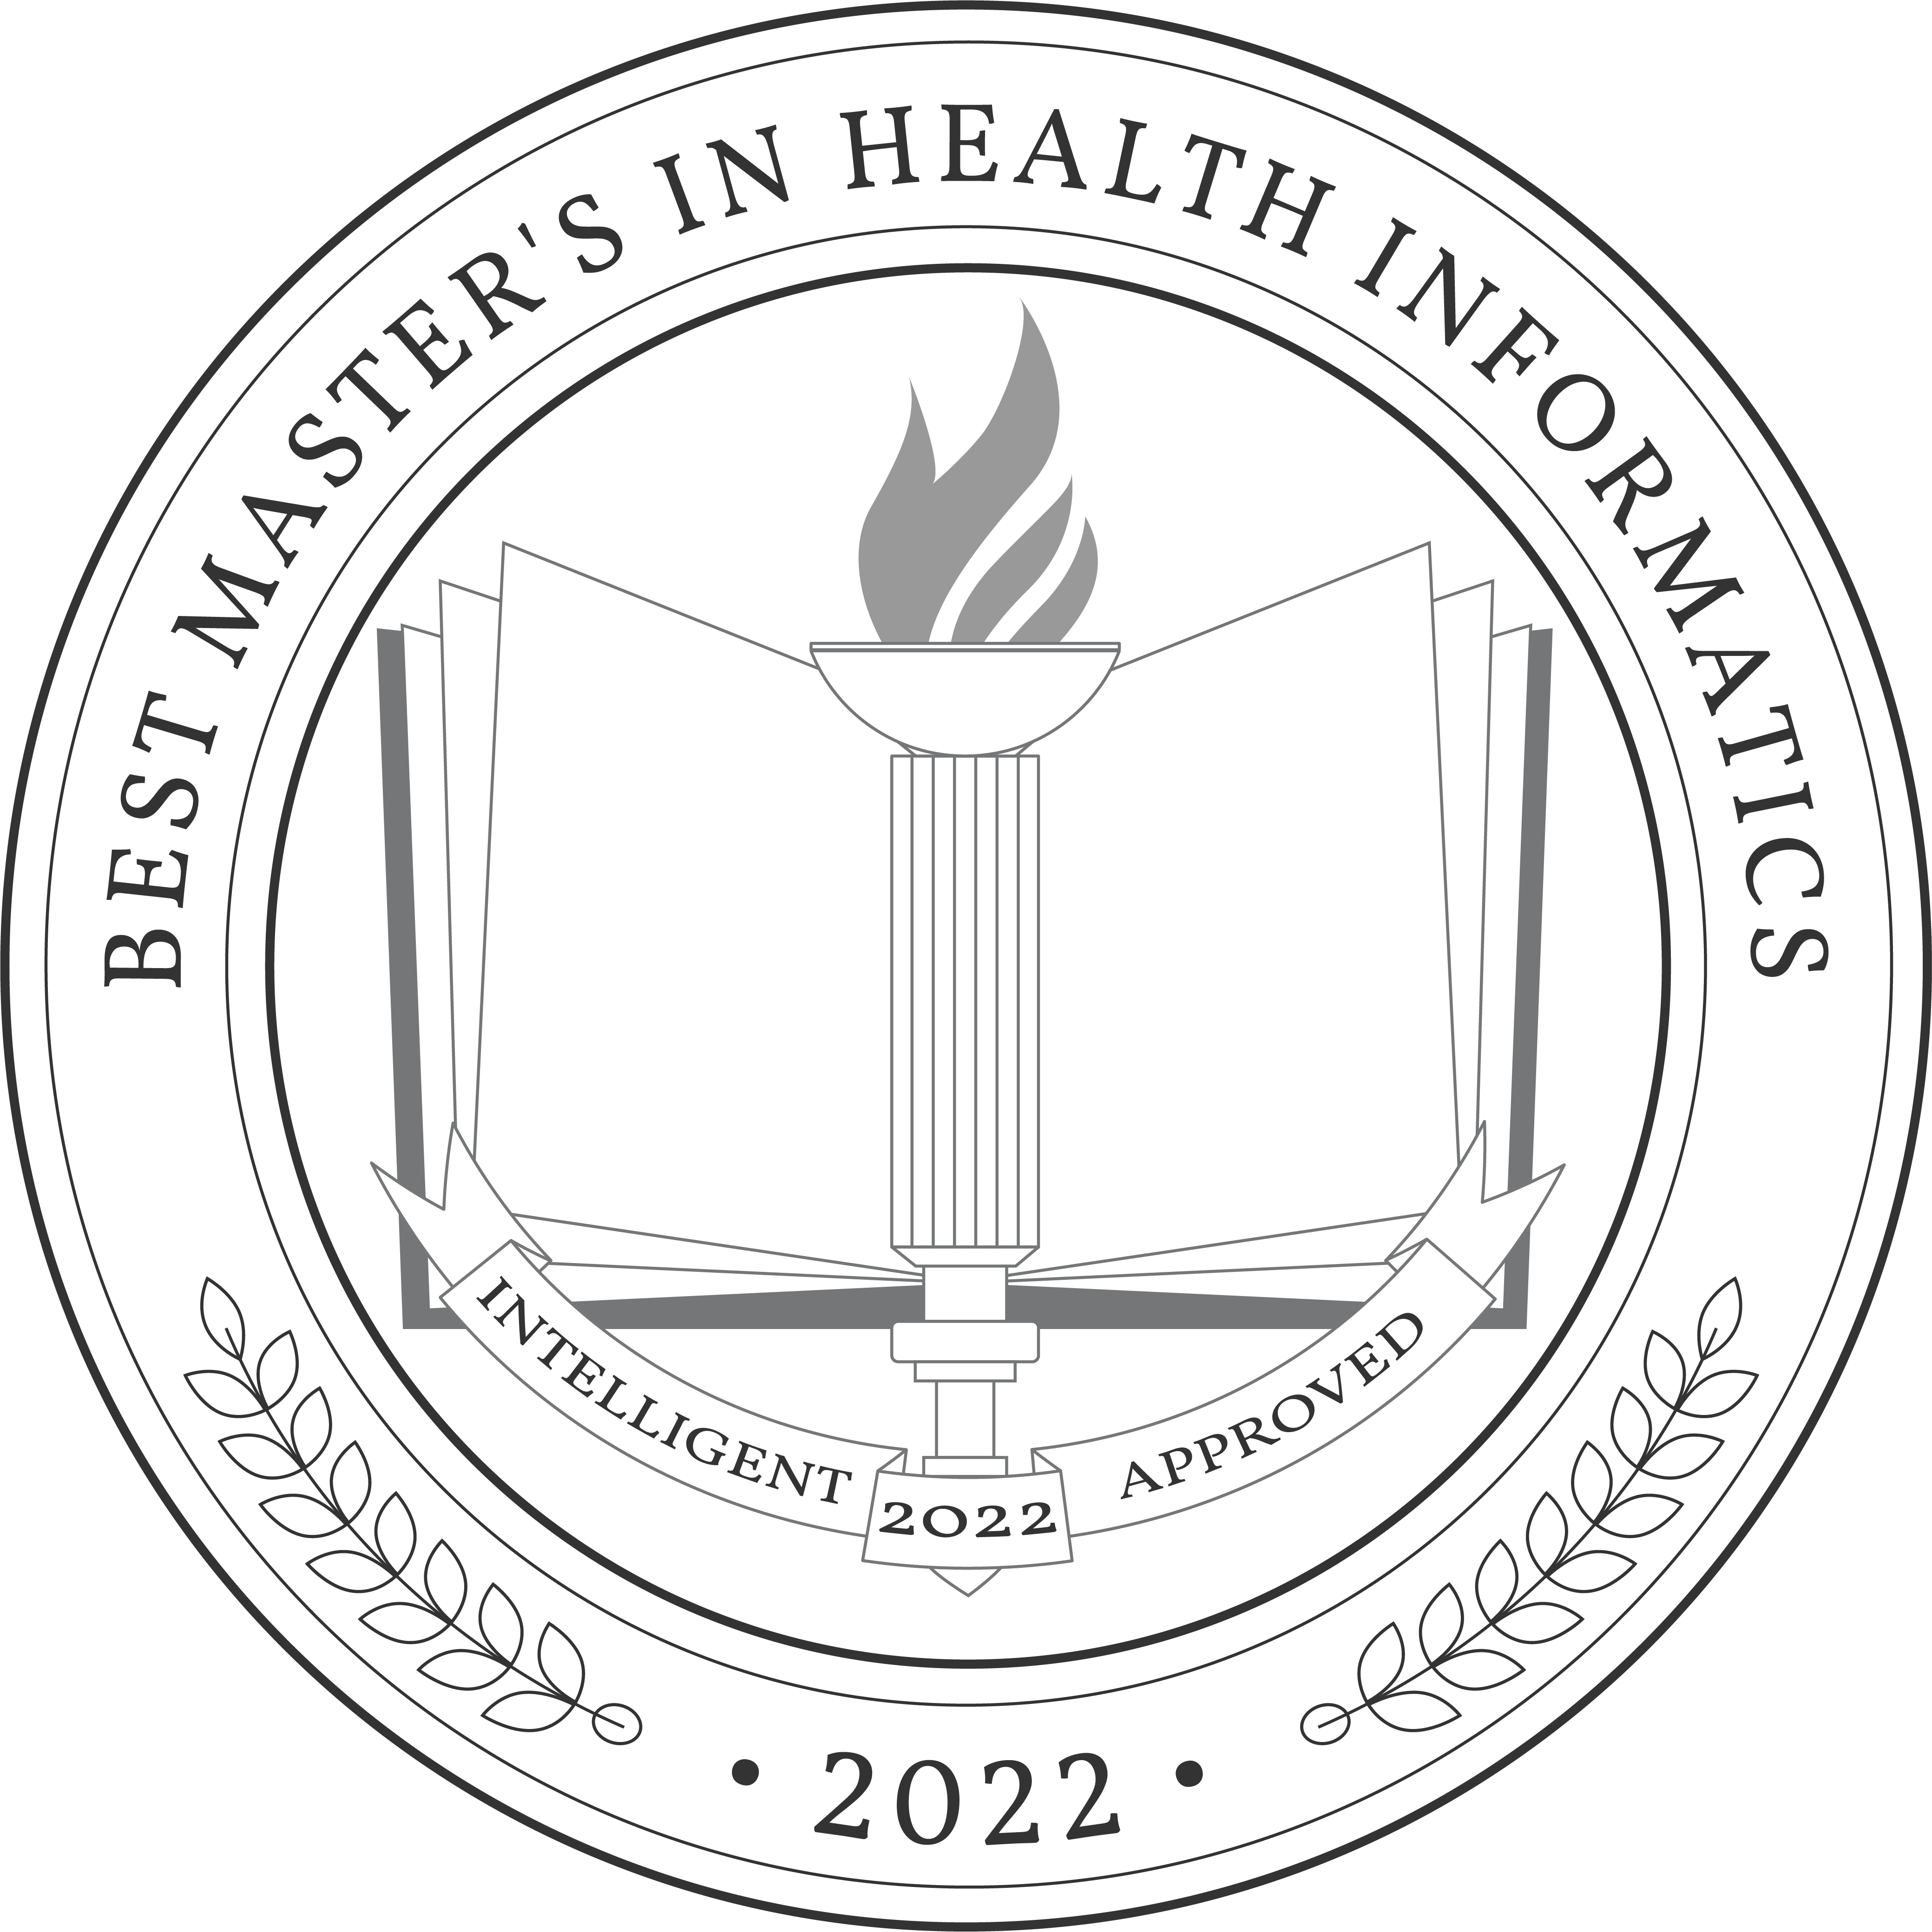 Best Online Master's in Health Informatics Degree Programs